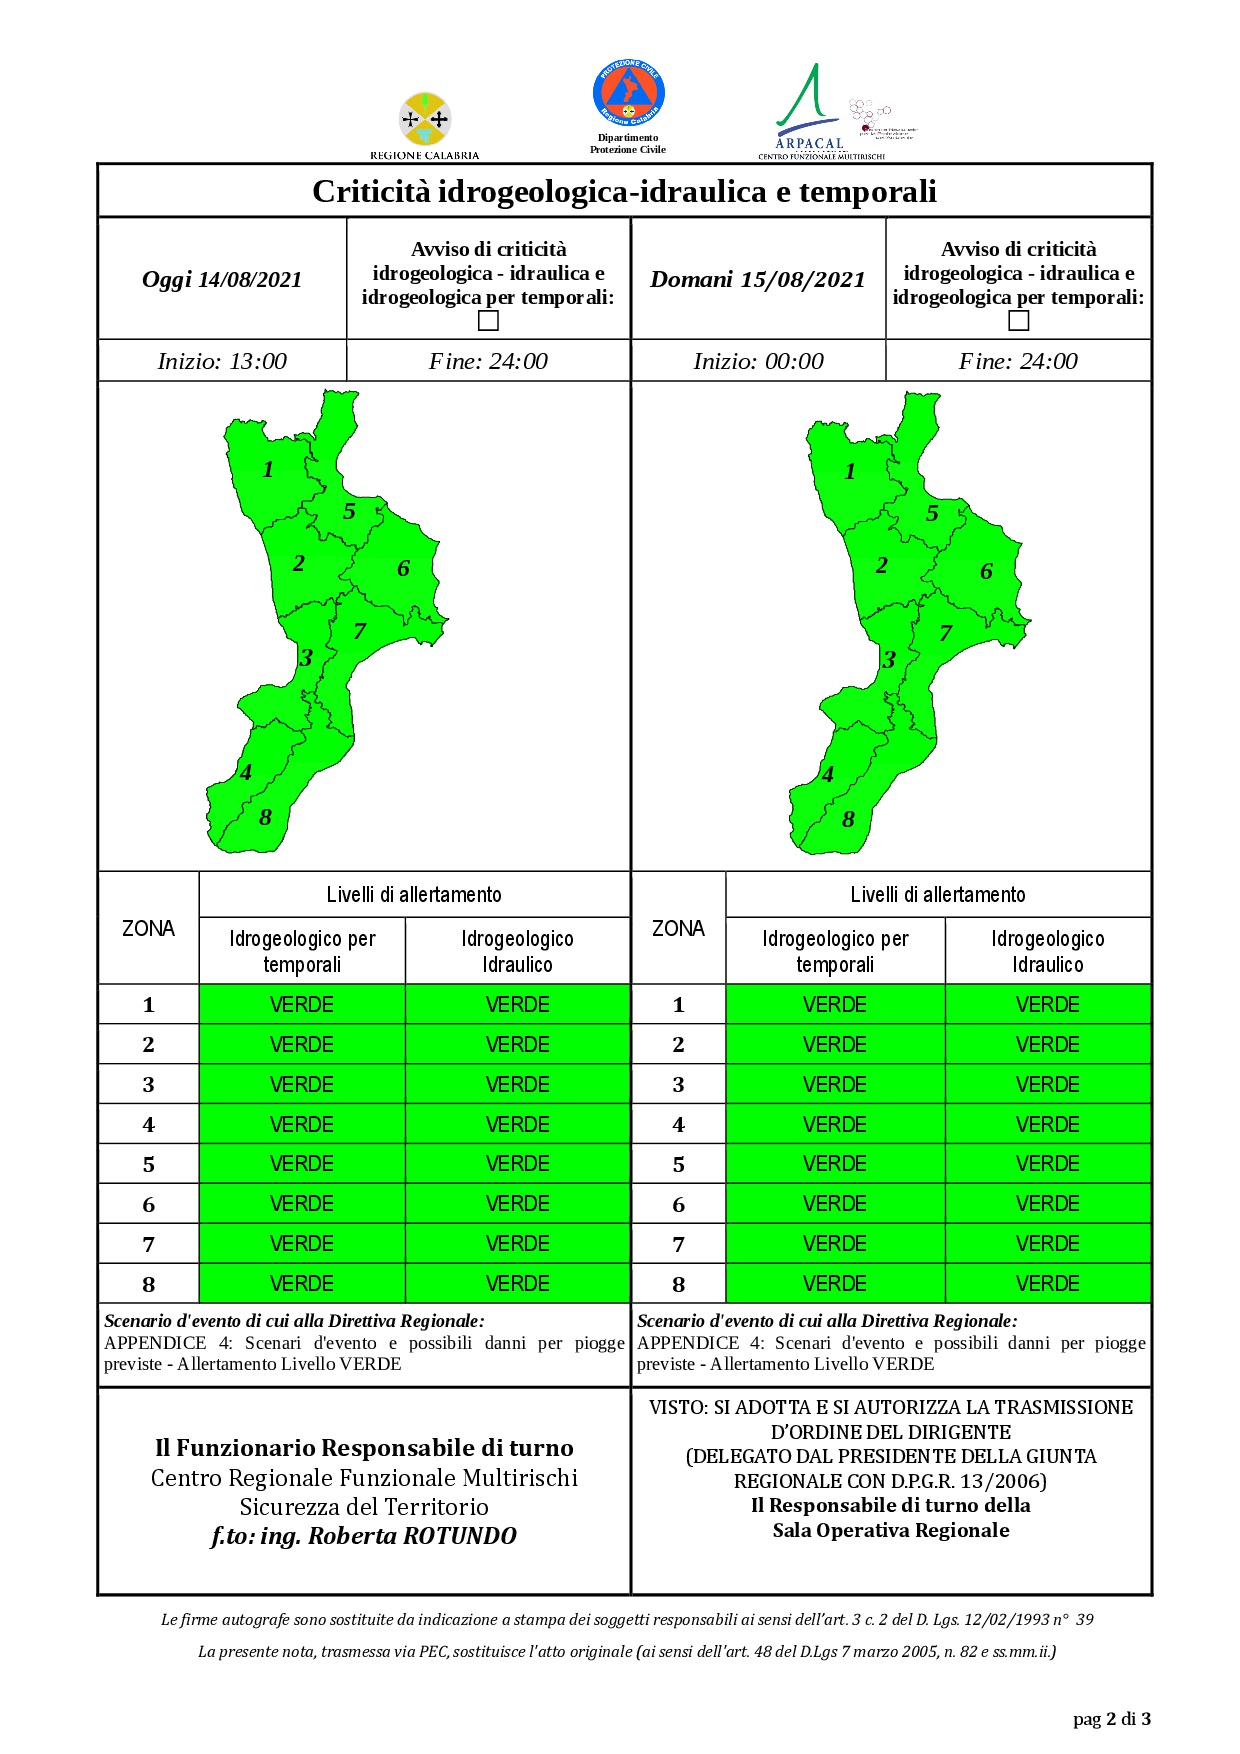 Criticità idrogeologica-idraulica e temporali in Calabria 14-08-2021